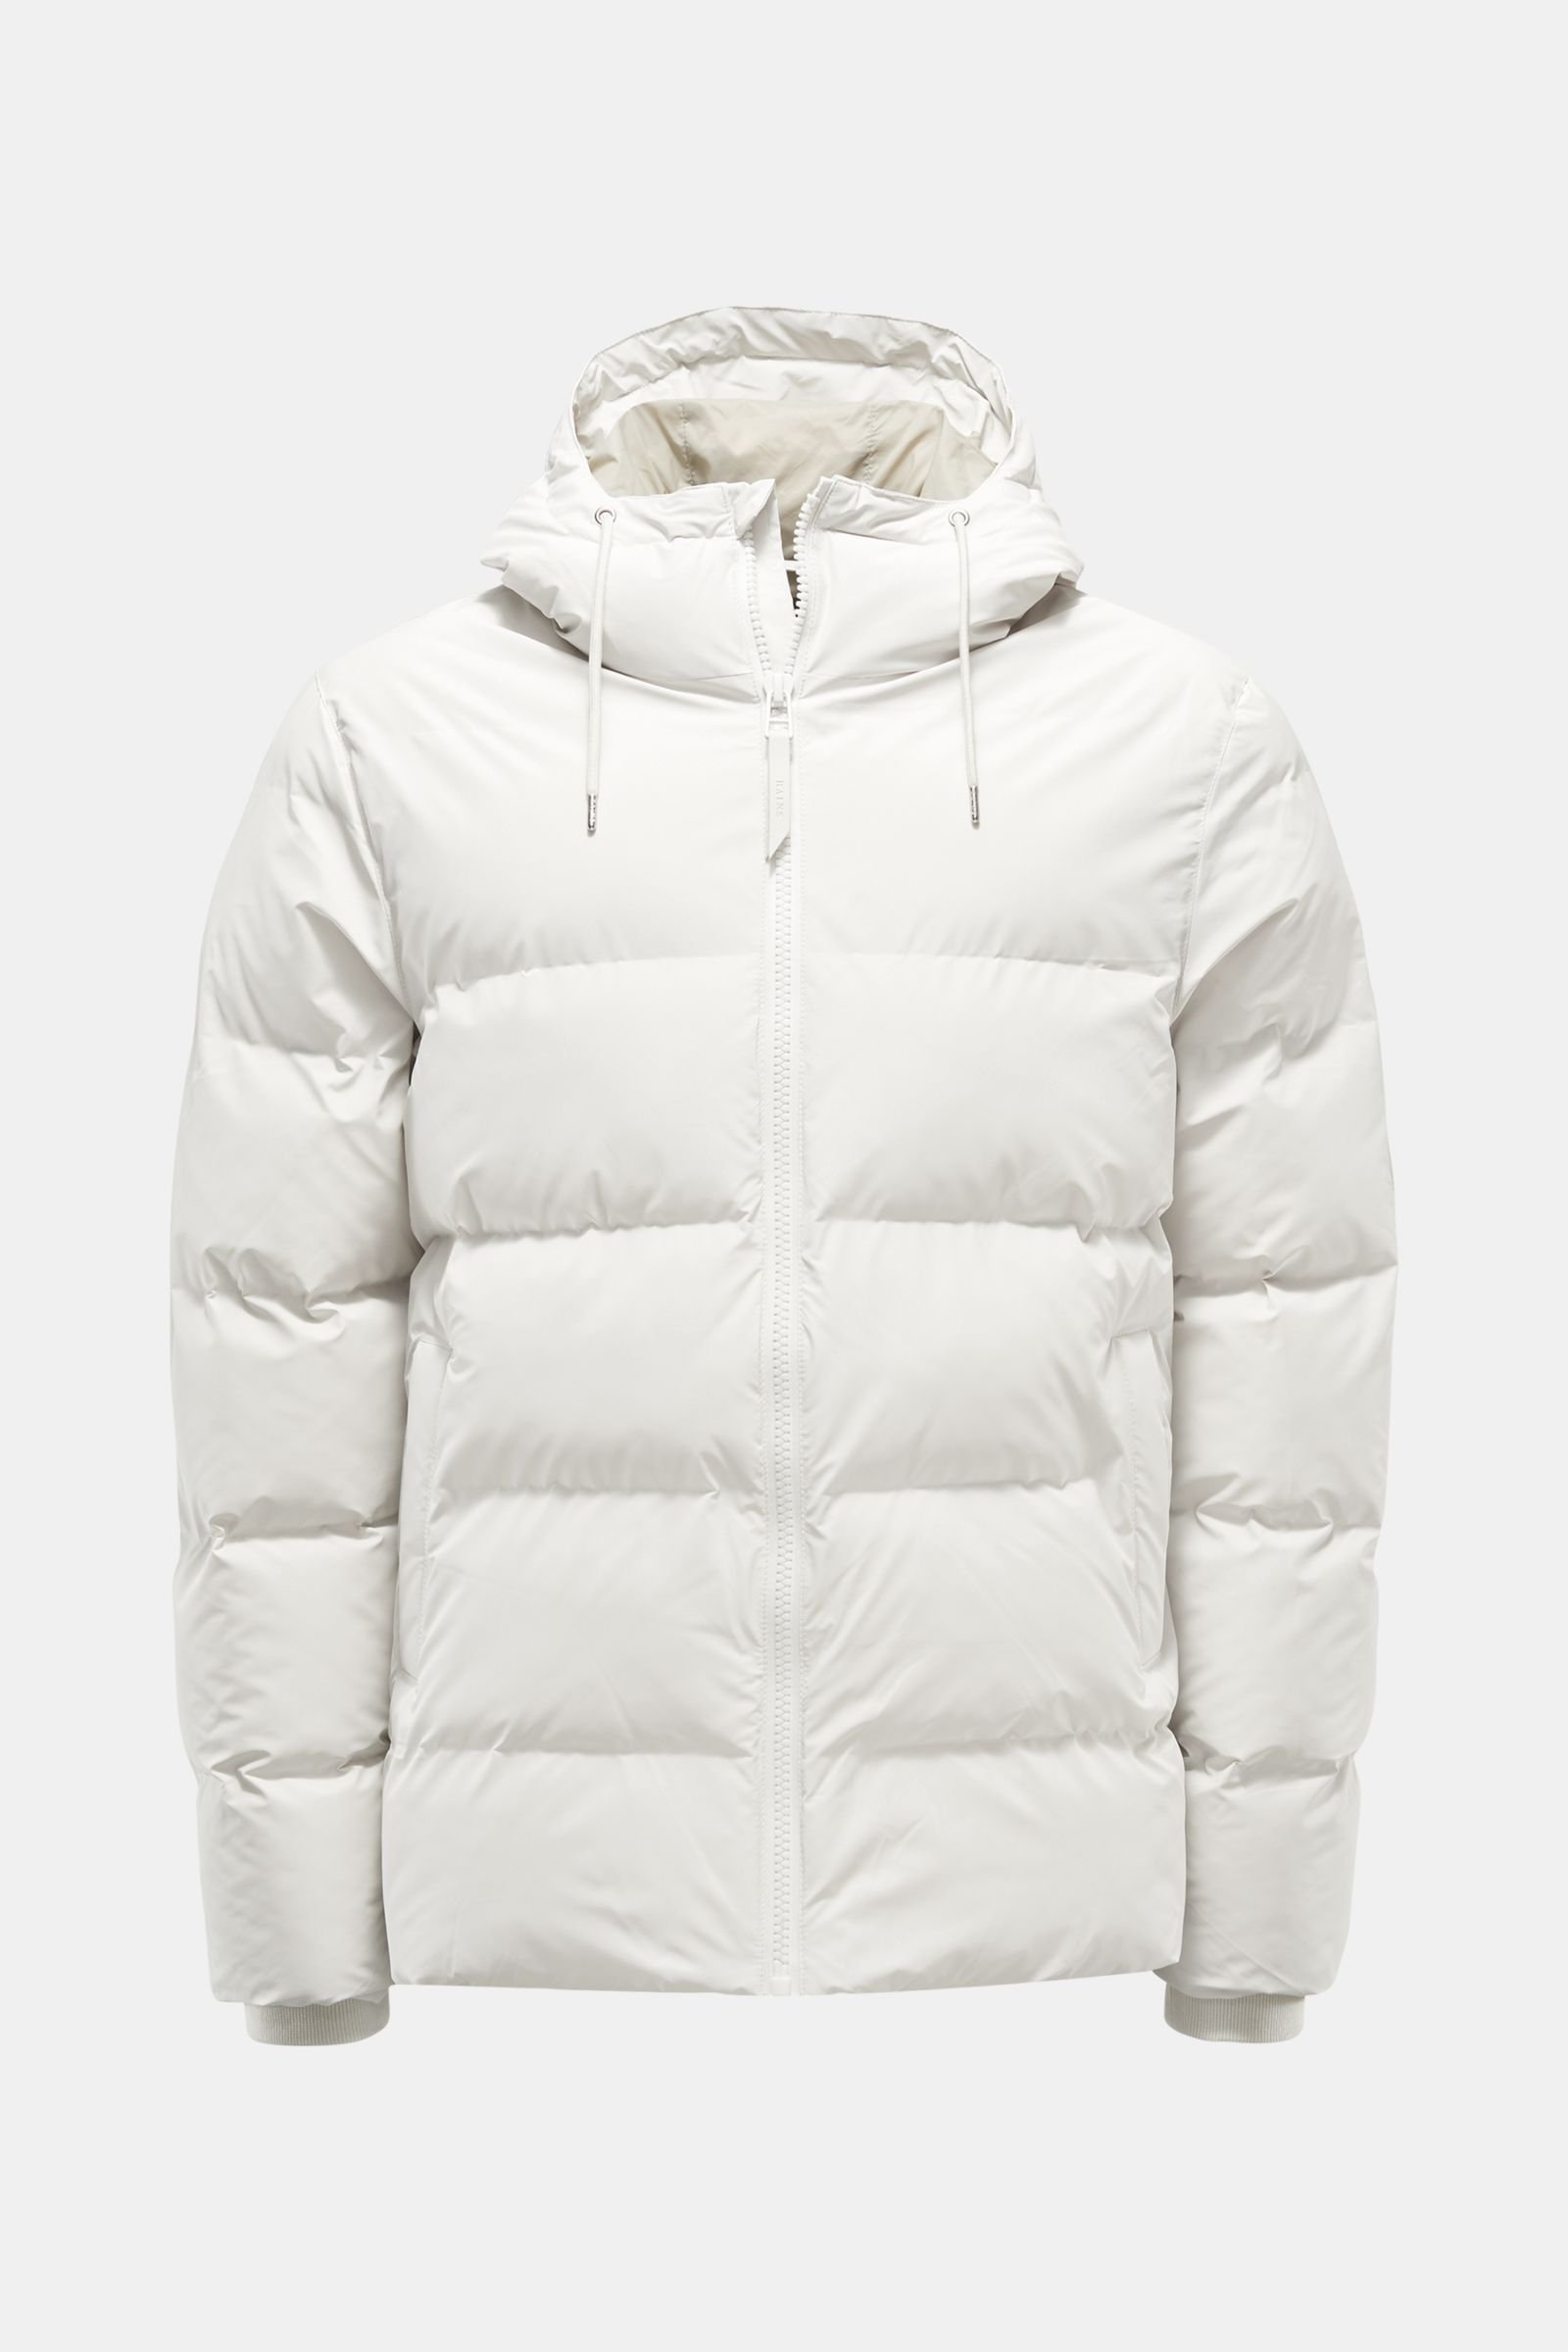 RAINS jacket 'Puffer Jacket' off-white | BRAUN Hamburg